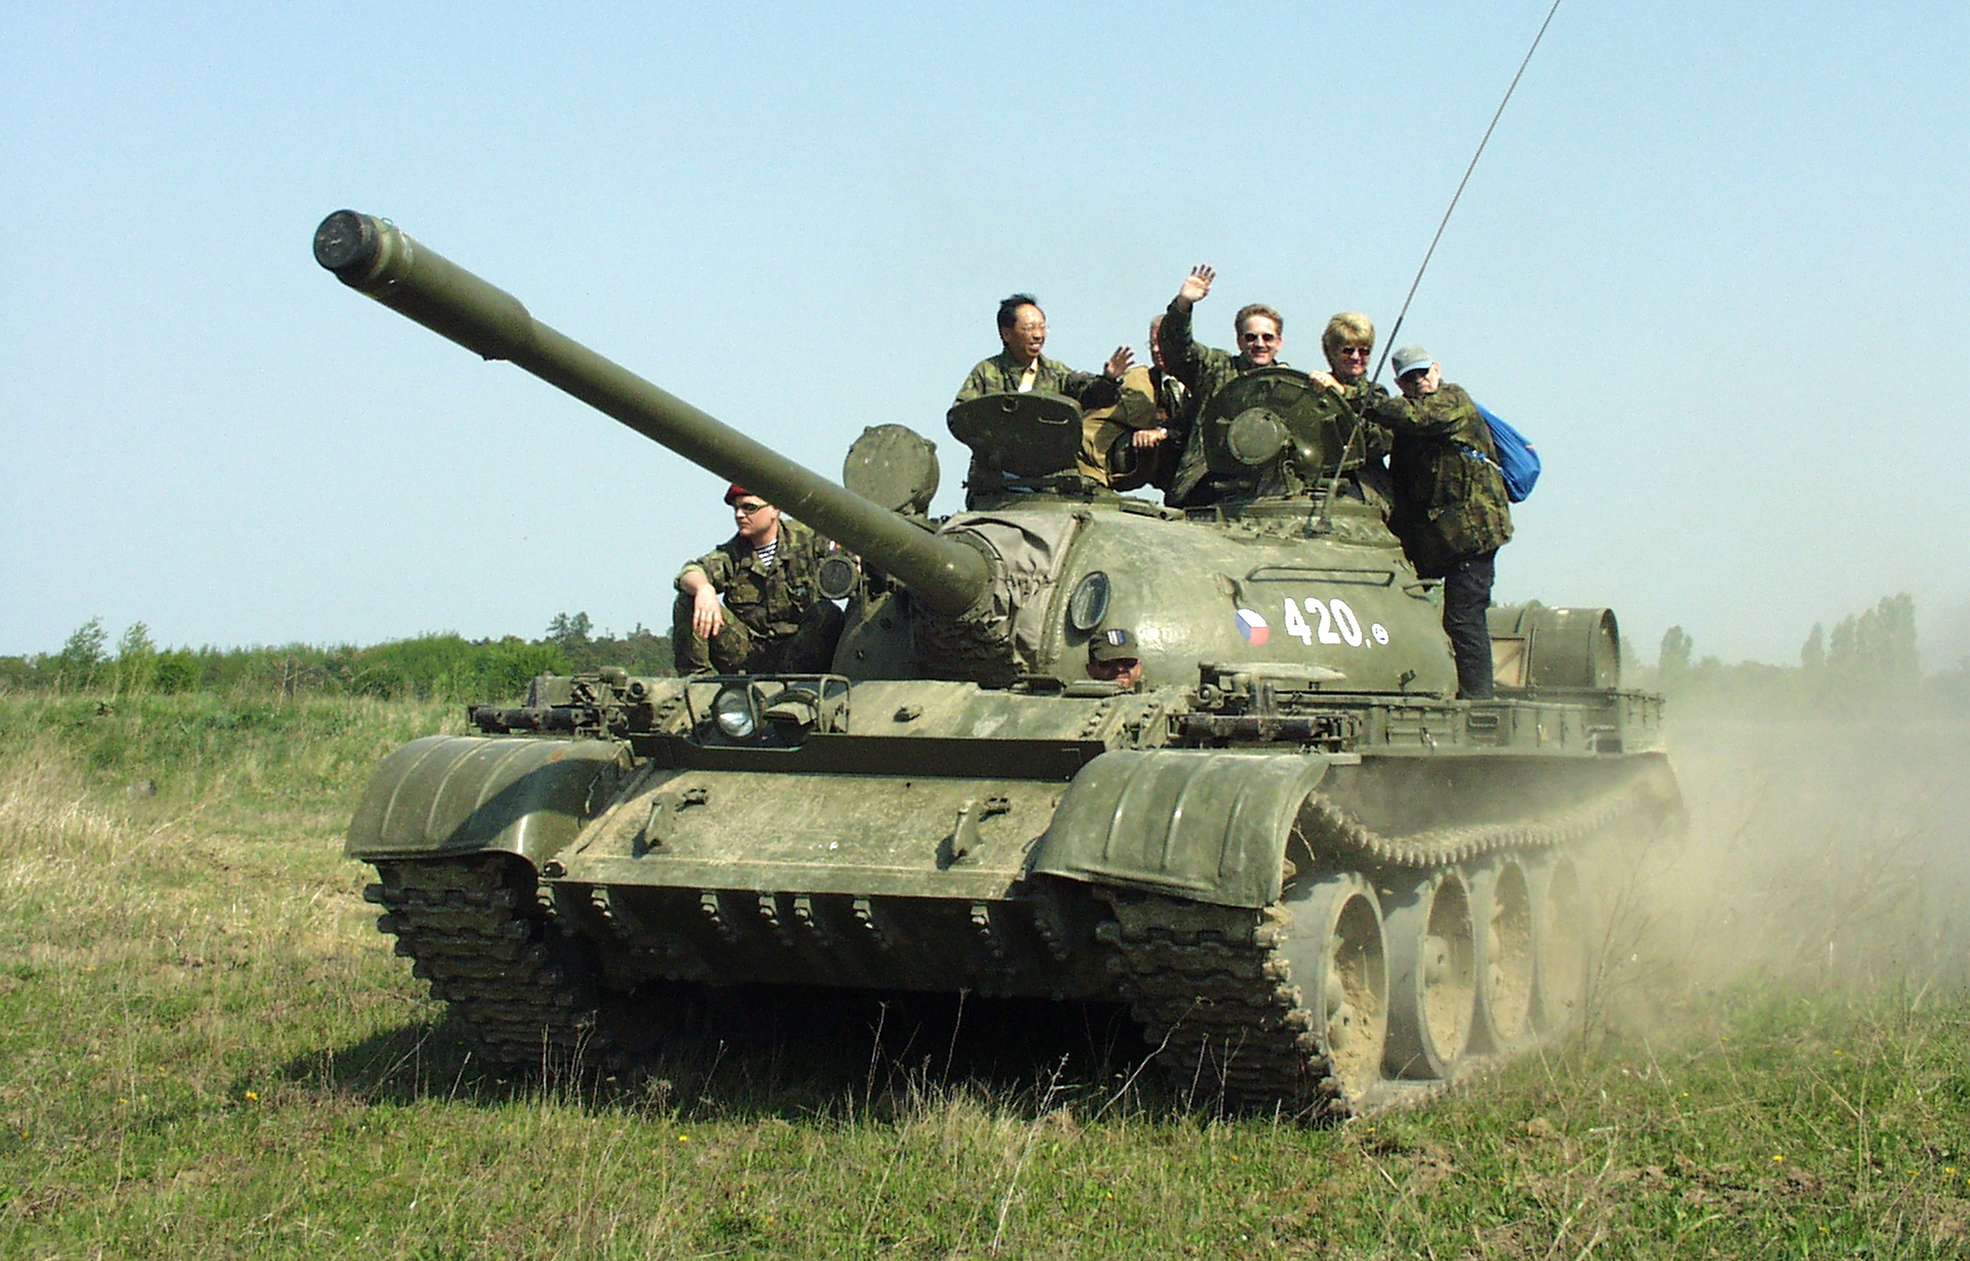 tanks-guns-shooting-team-building-collage-04.jpg